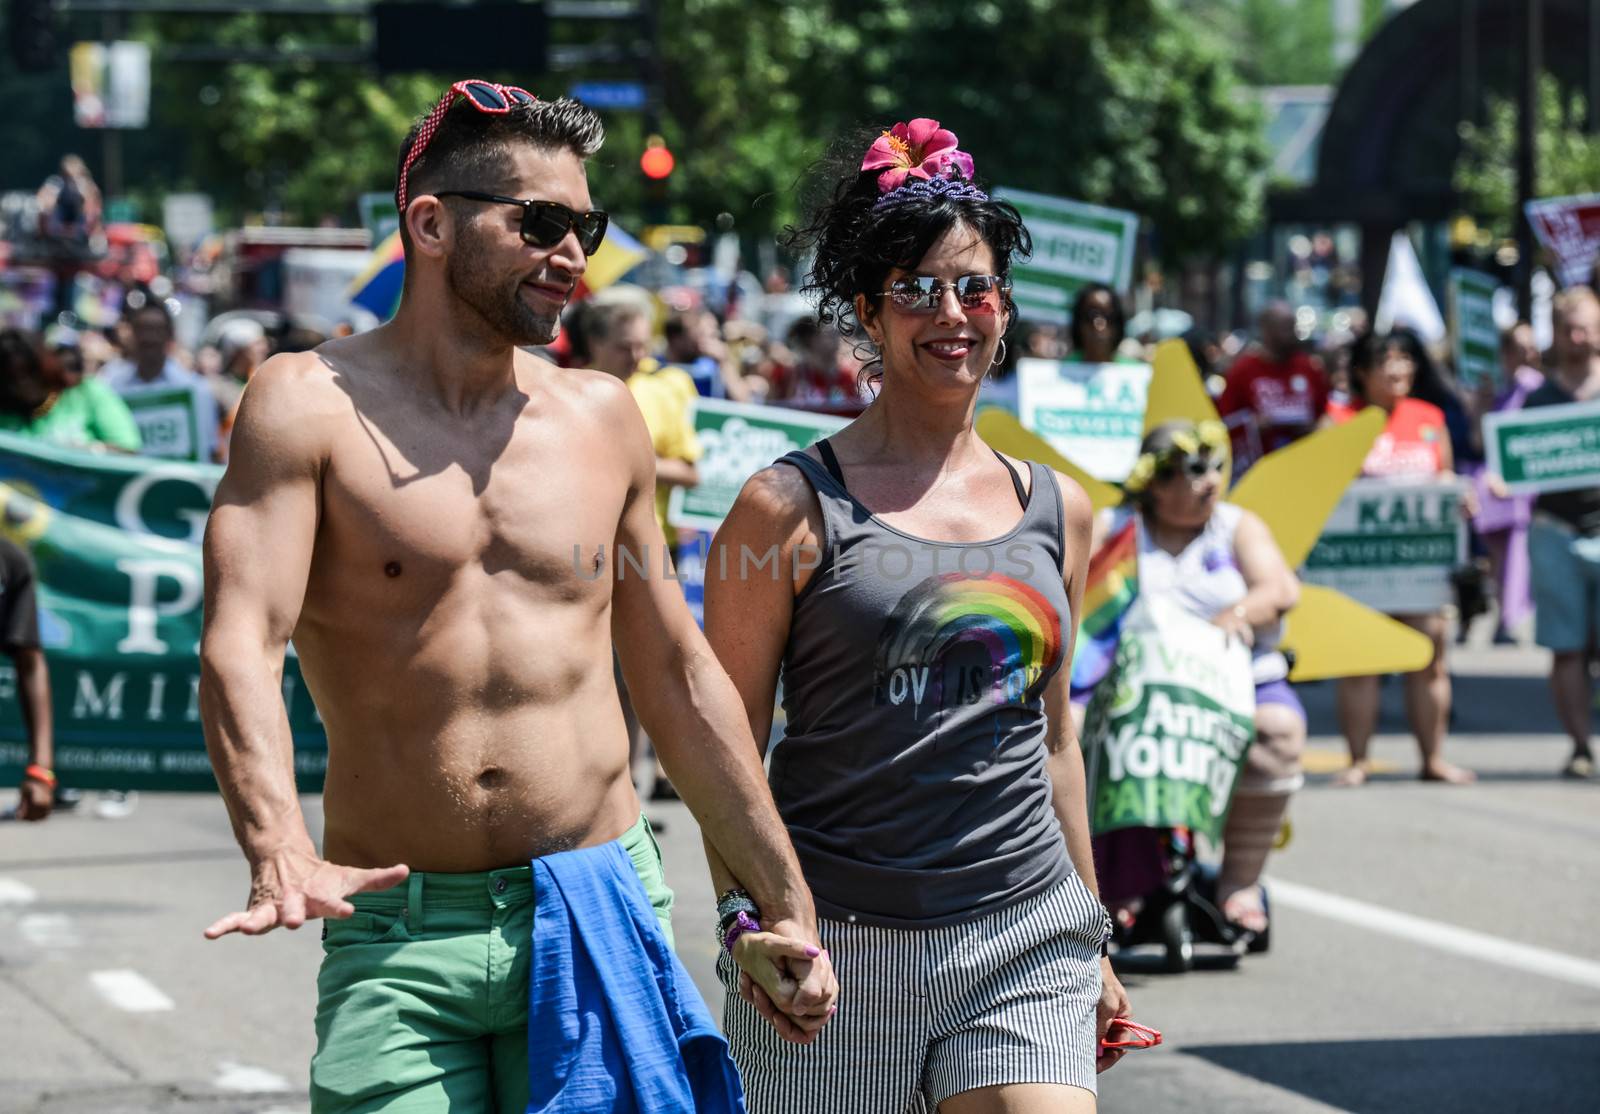 Minneapolis, Minnesota - June 30: Twin Cities LGBT Pride Parade 2013, in Minneapolis,MN, on June 30, 2013.